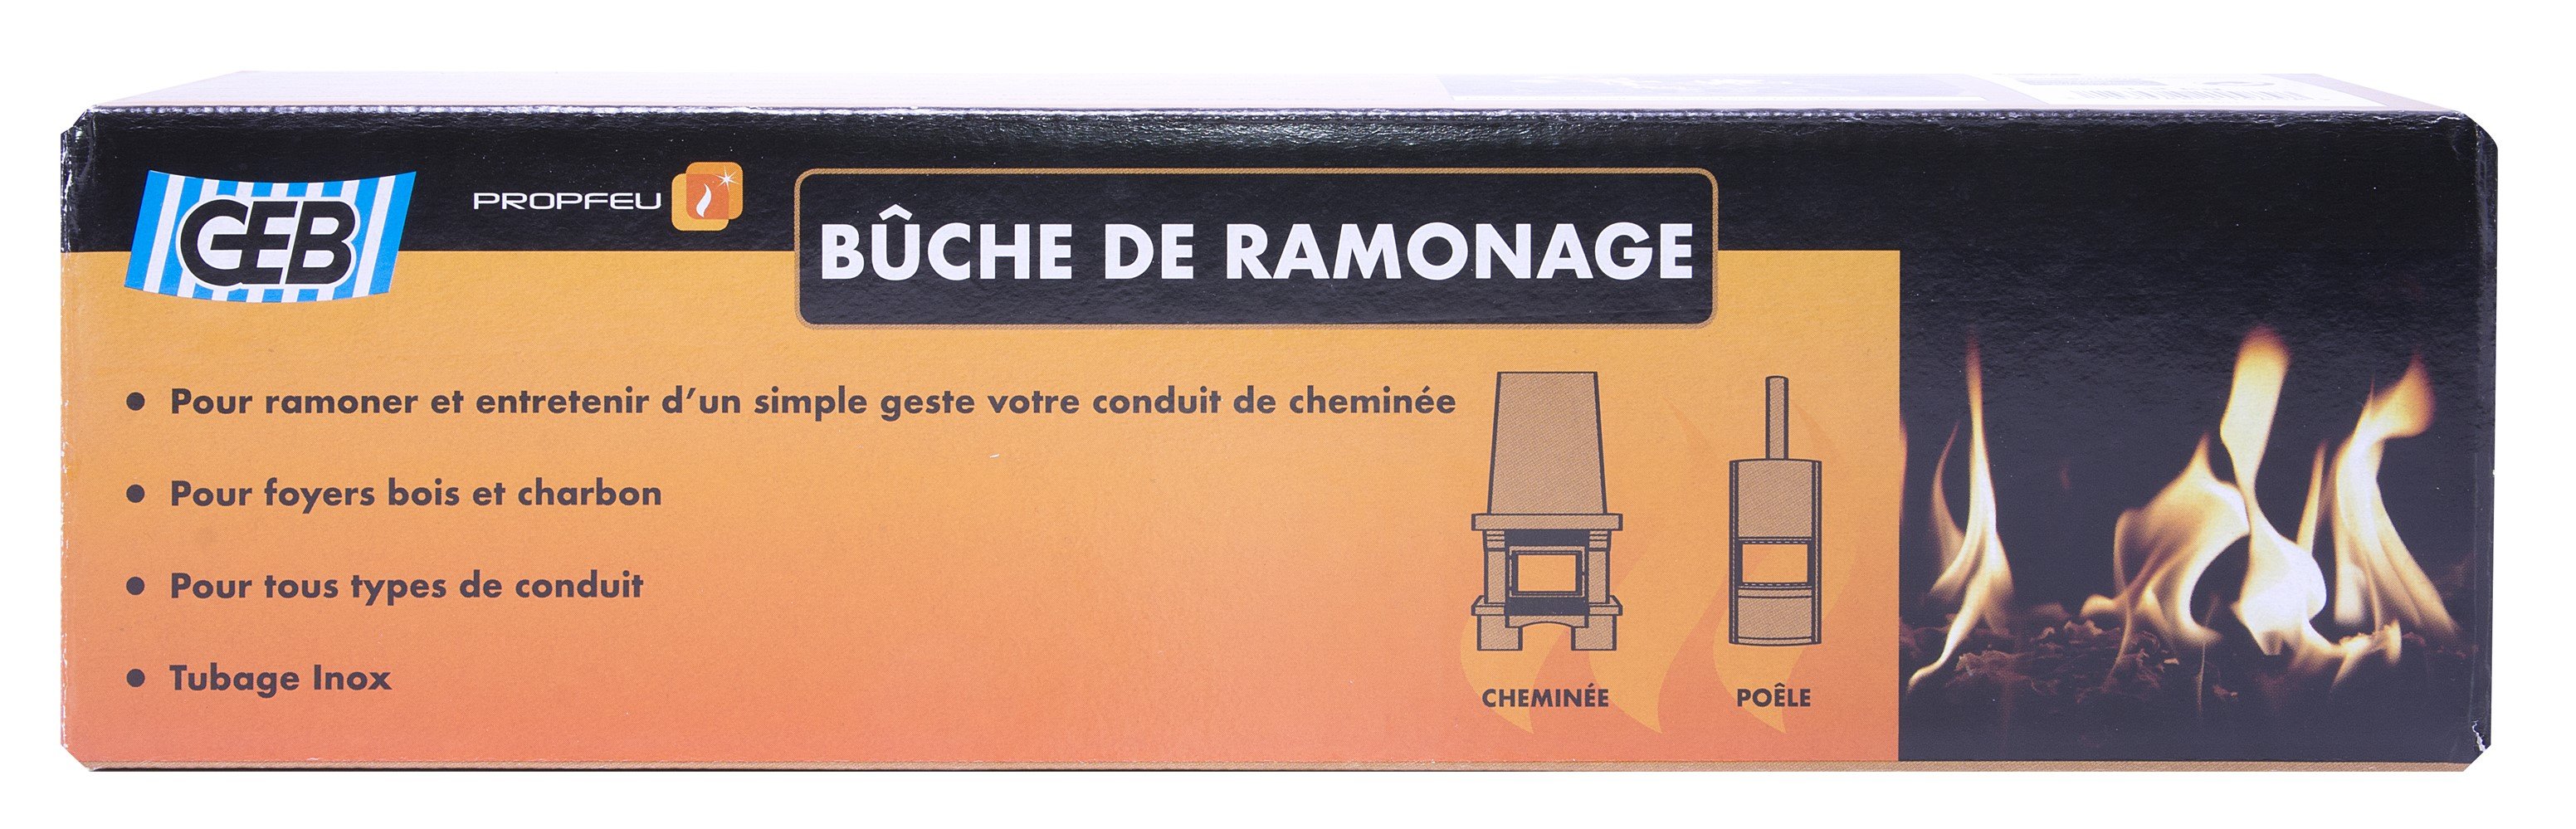 PROPFEU BUCHE DE RAMONAGE - Geb Particulier